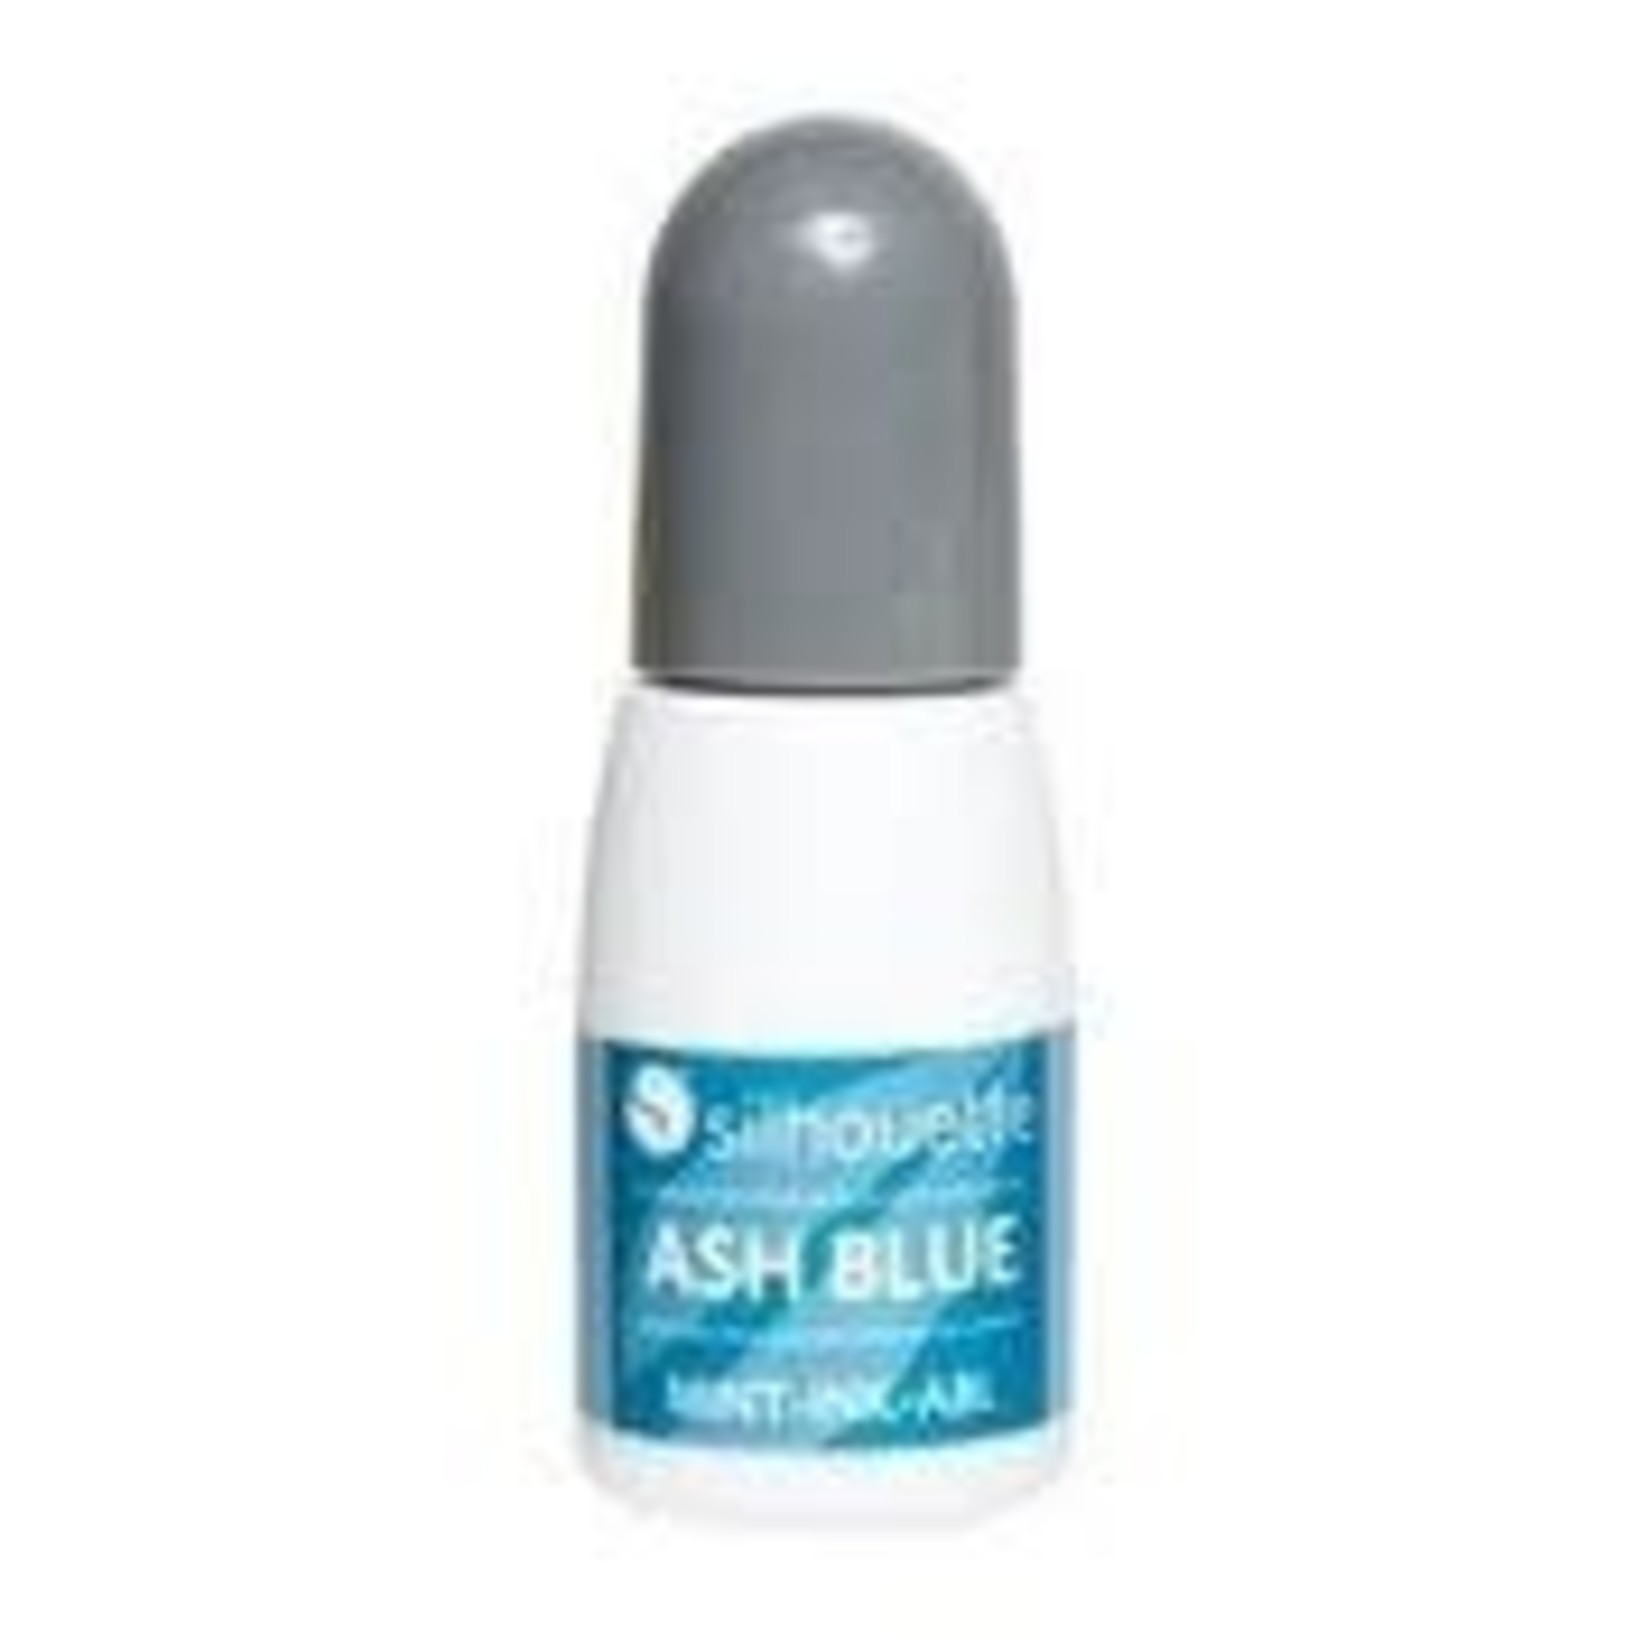 Silhouette mint inkt ash blue